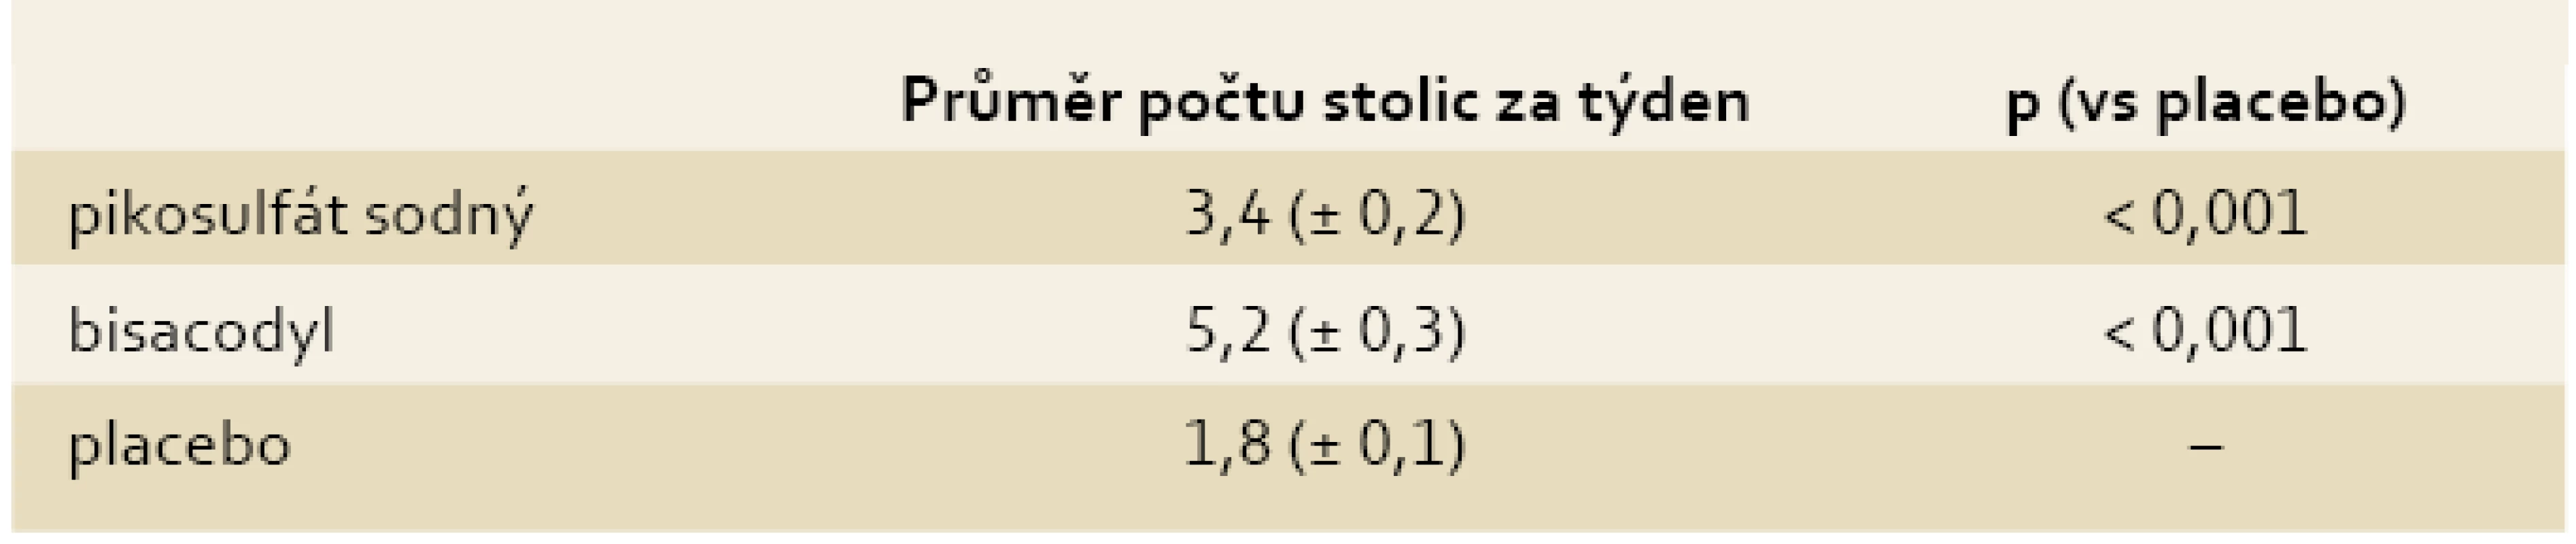 Účinnost pikosulfátu sodného a bisacodylu ve srovnání s placebem [14,15].
Tab. 3. Efficacy of sodium picosulphate and bisacodyl compared to placebo [14,15].